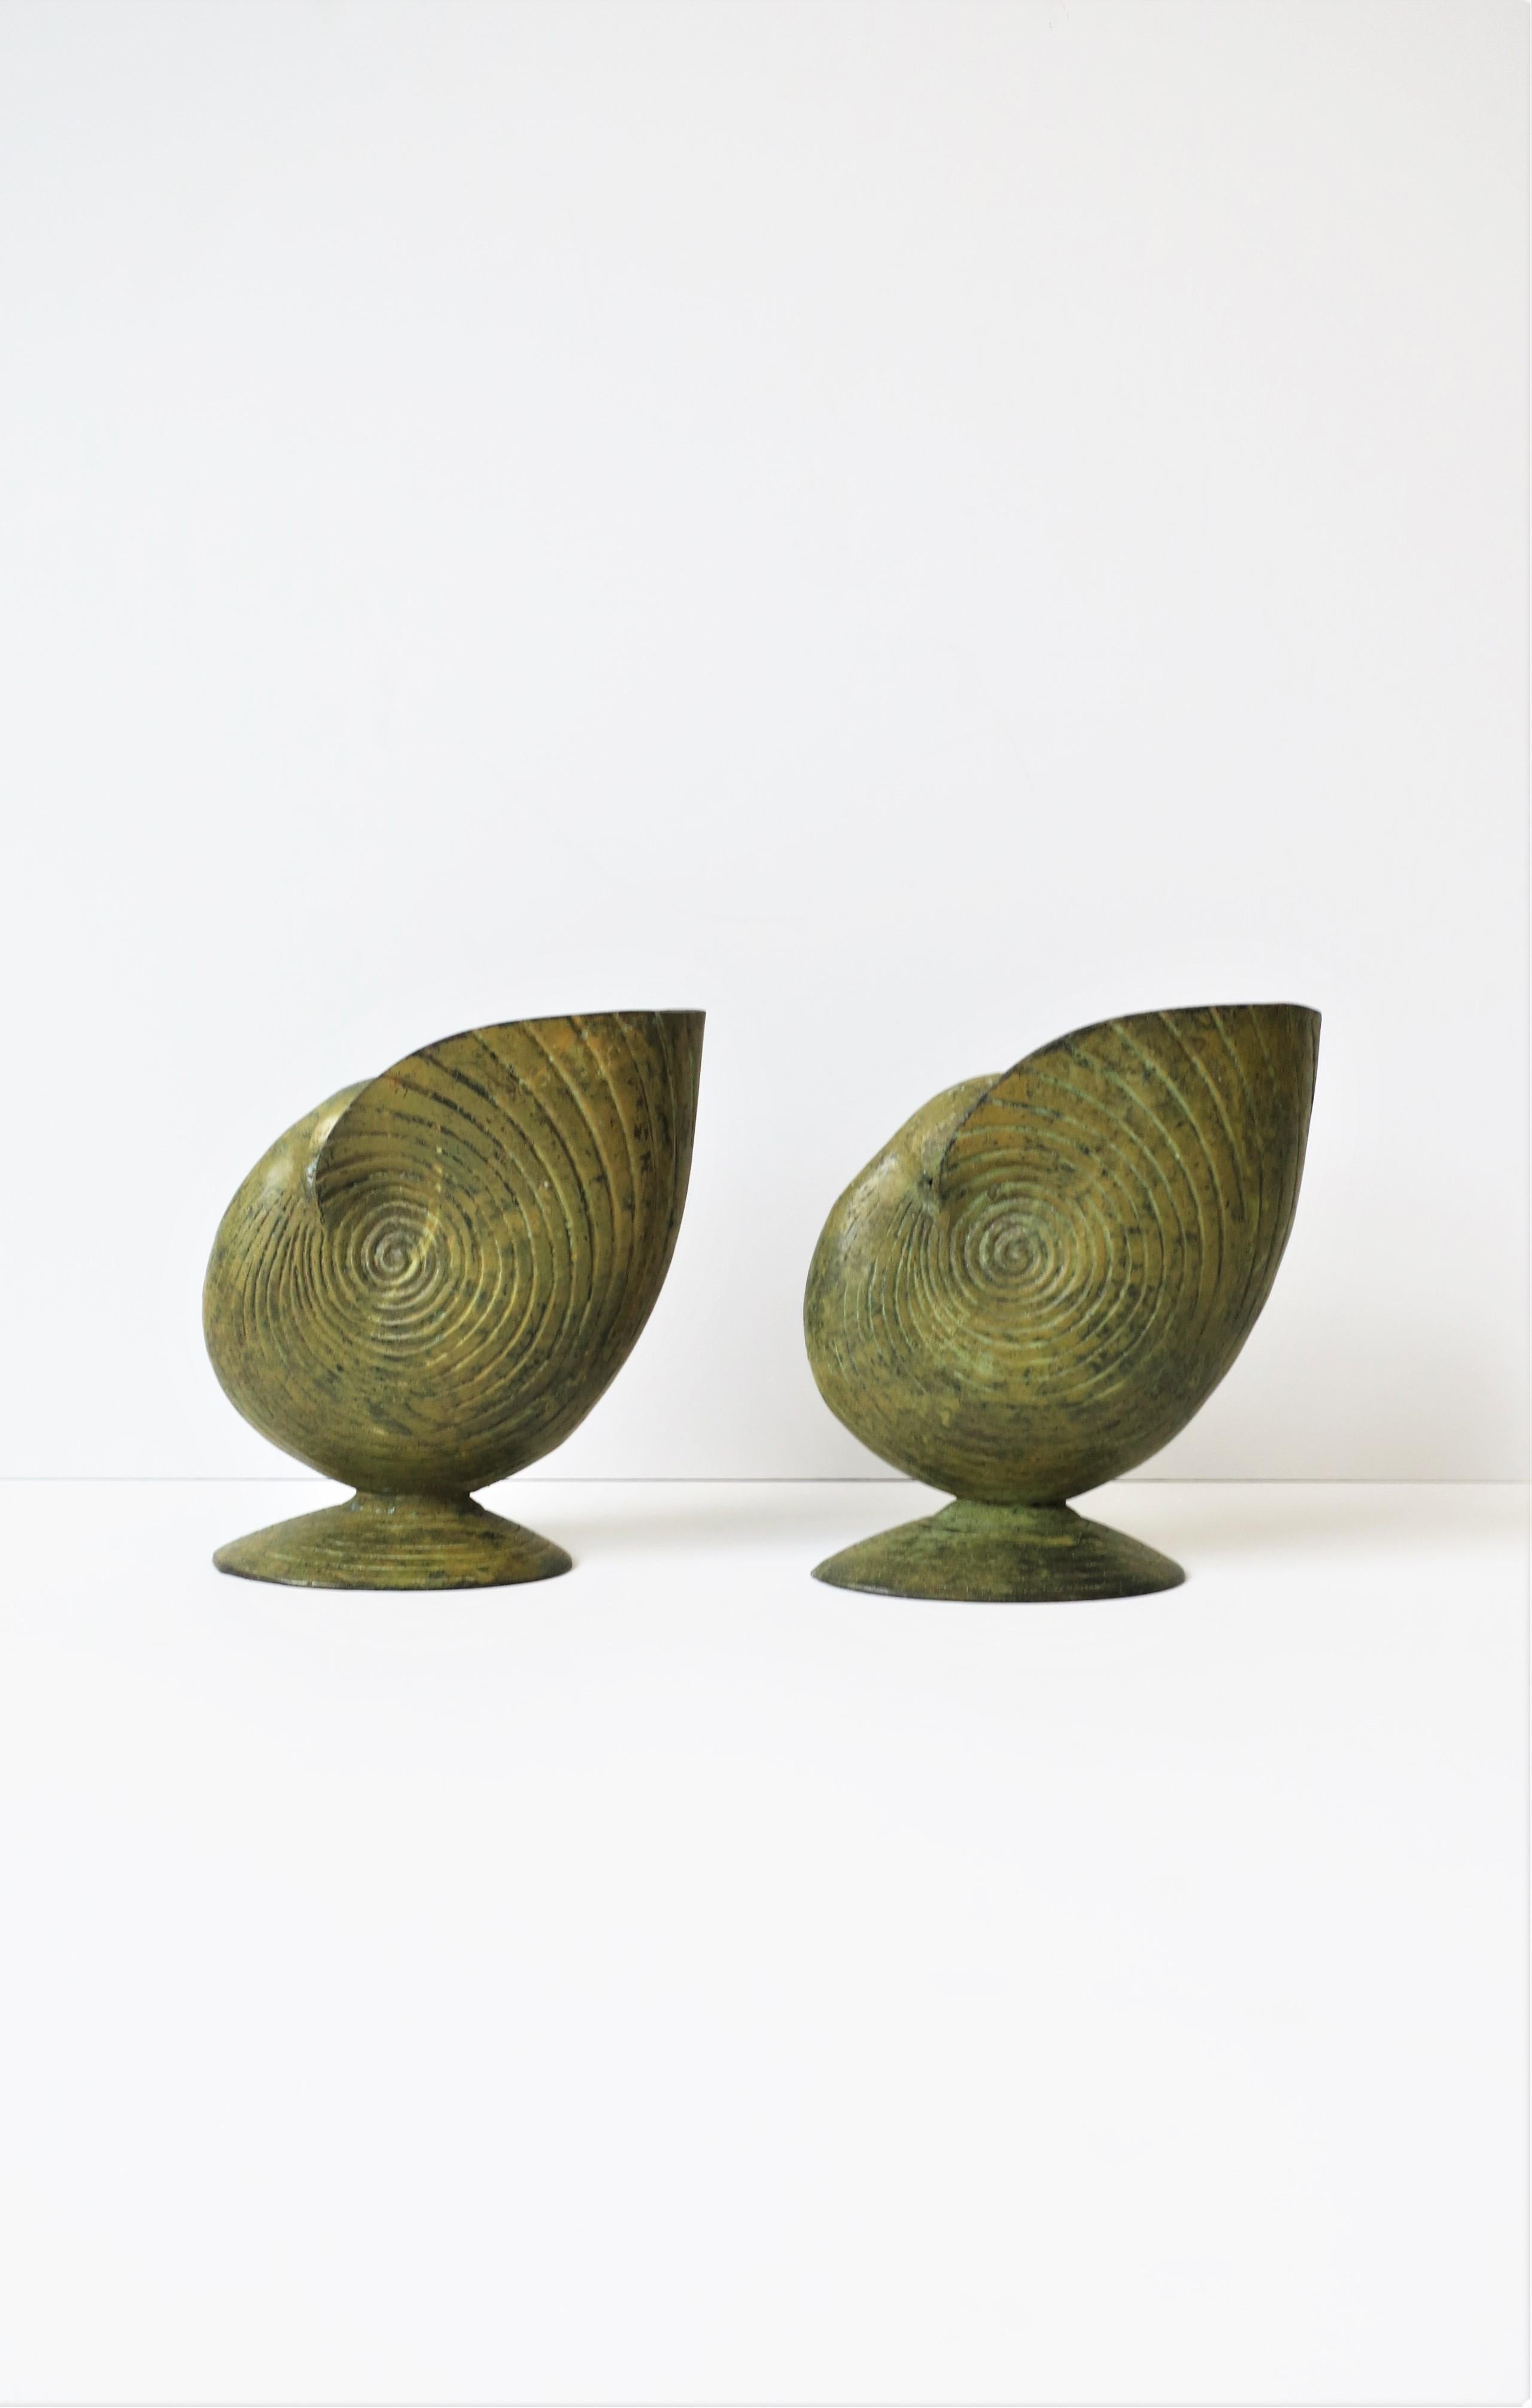 Metal Nautilus Seashell Vases with Yellow Hue, Pair 7